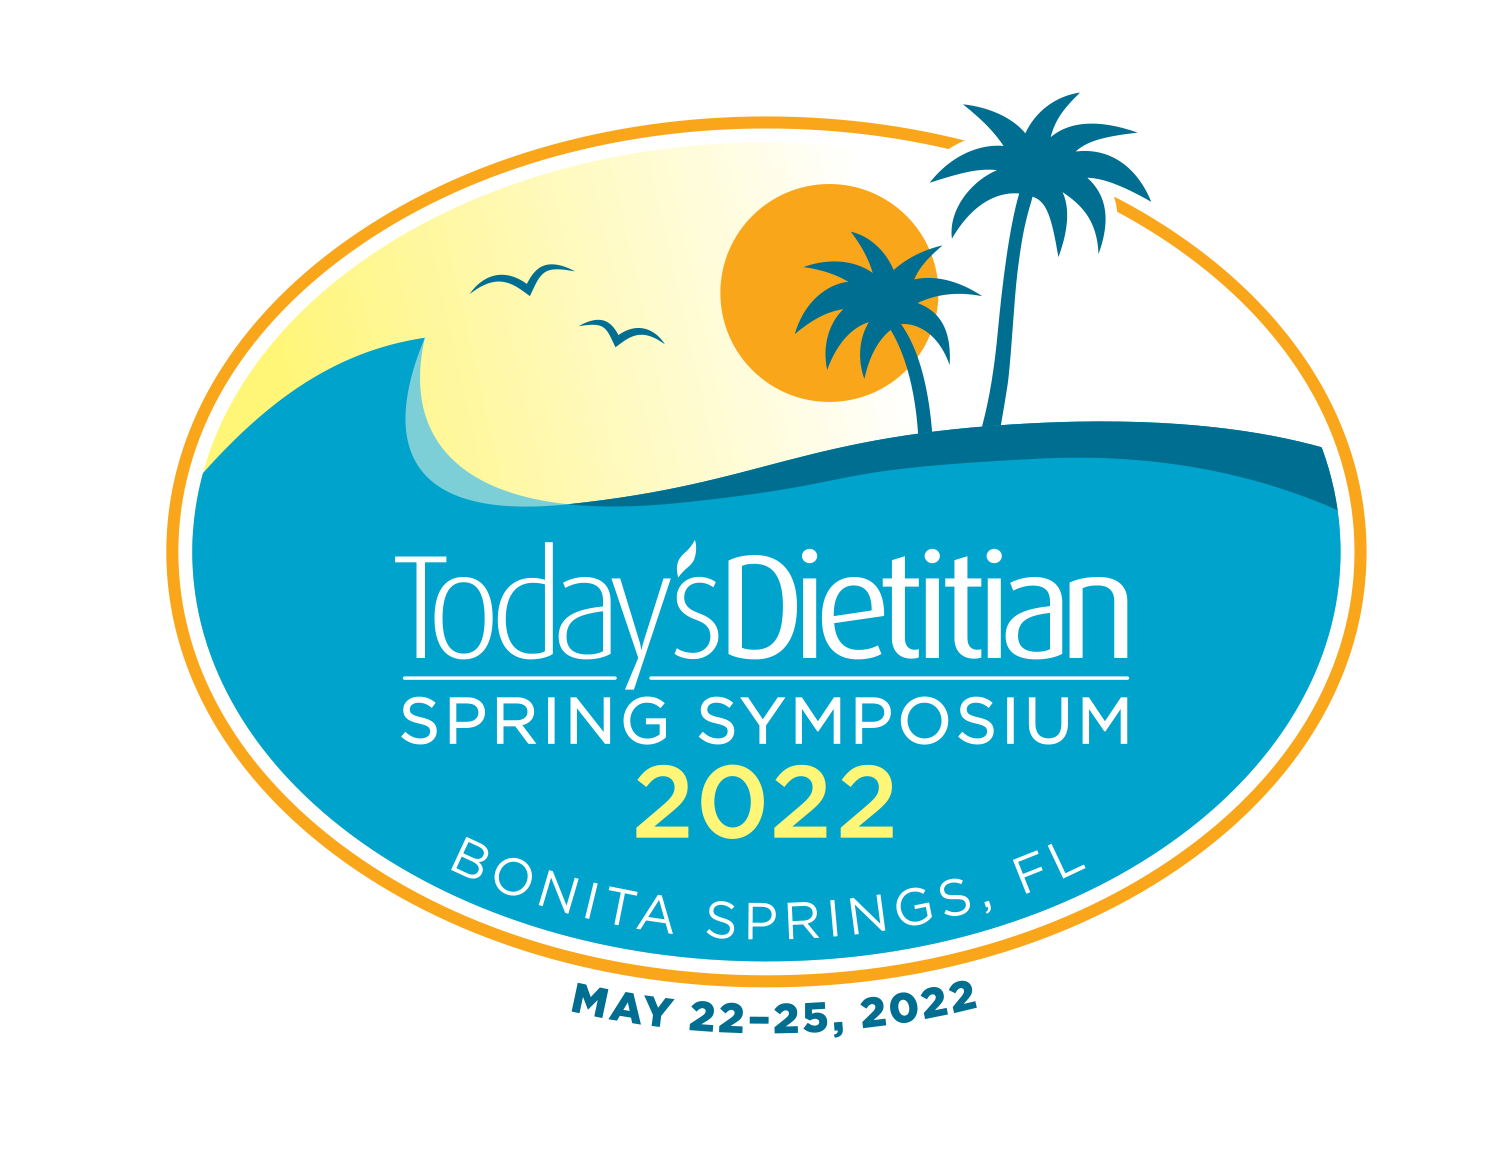 2022 Today's Dietitian Spring Symposium | May 22-25, 2022, Bonita Springs, FL